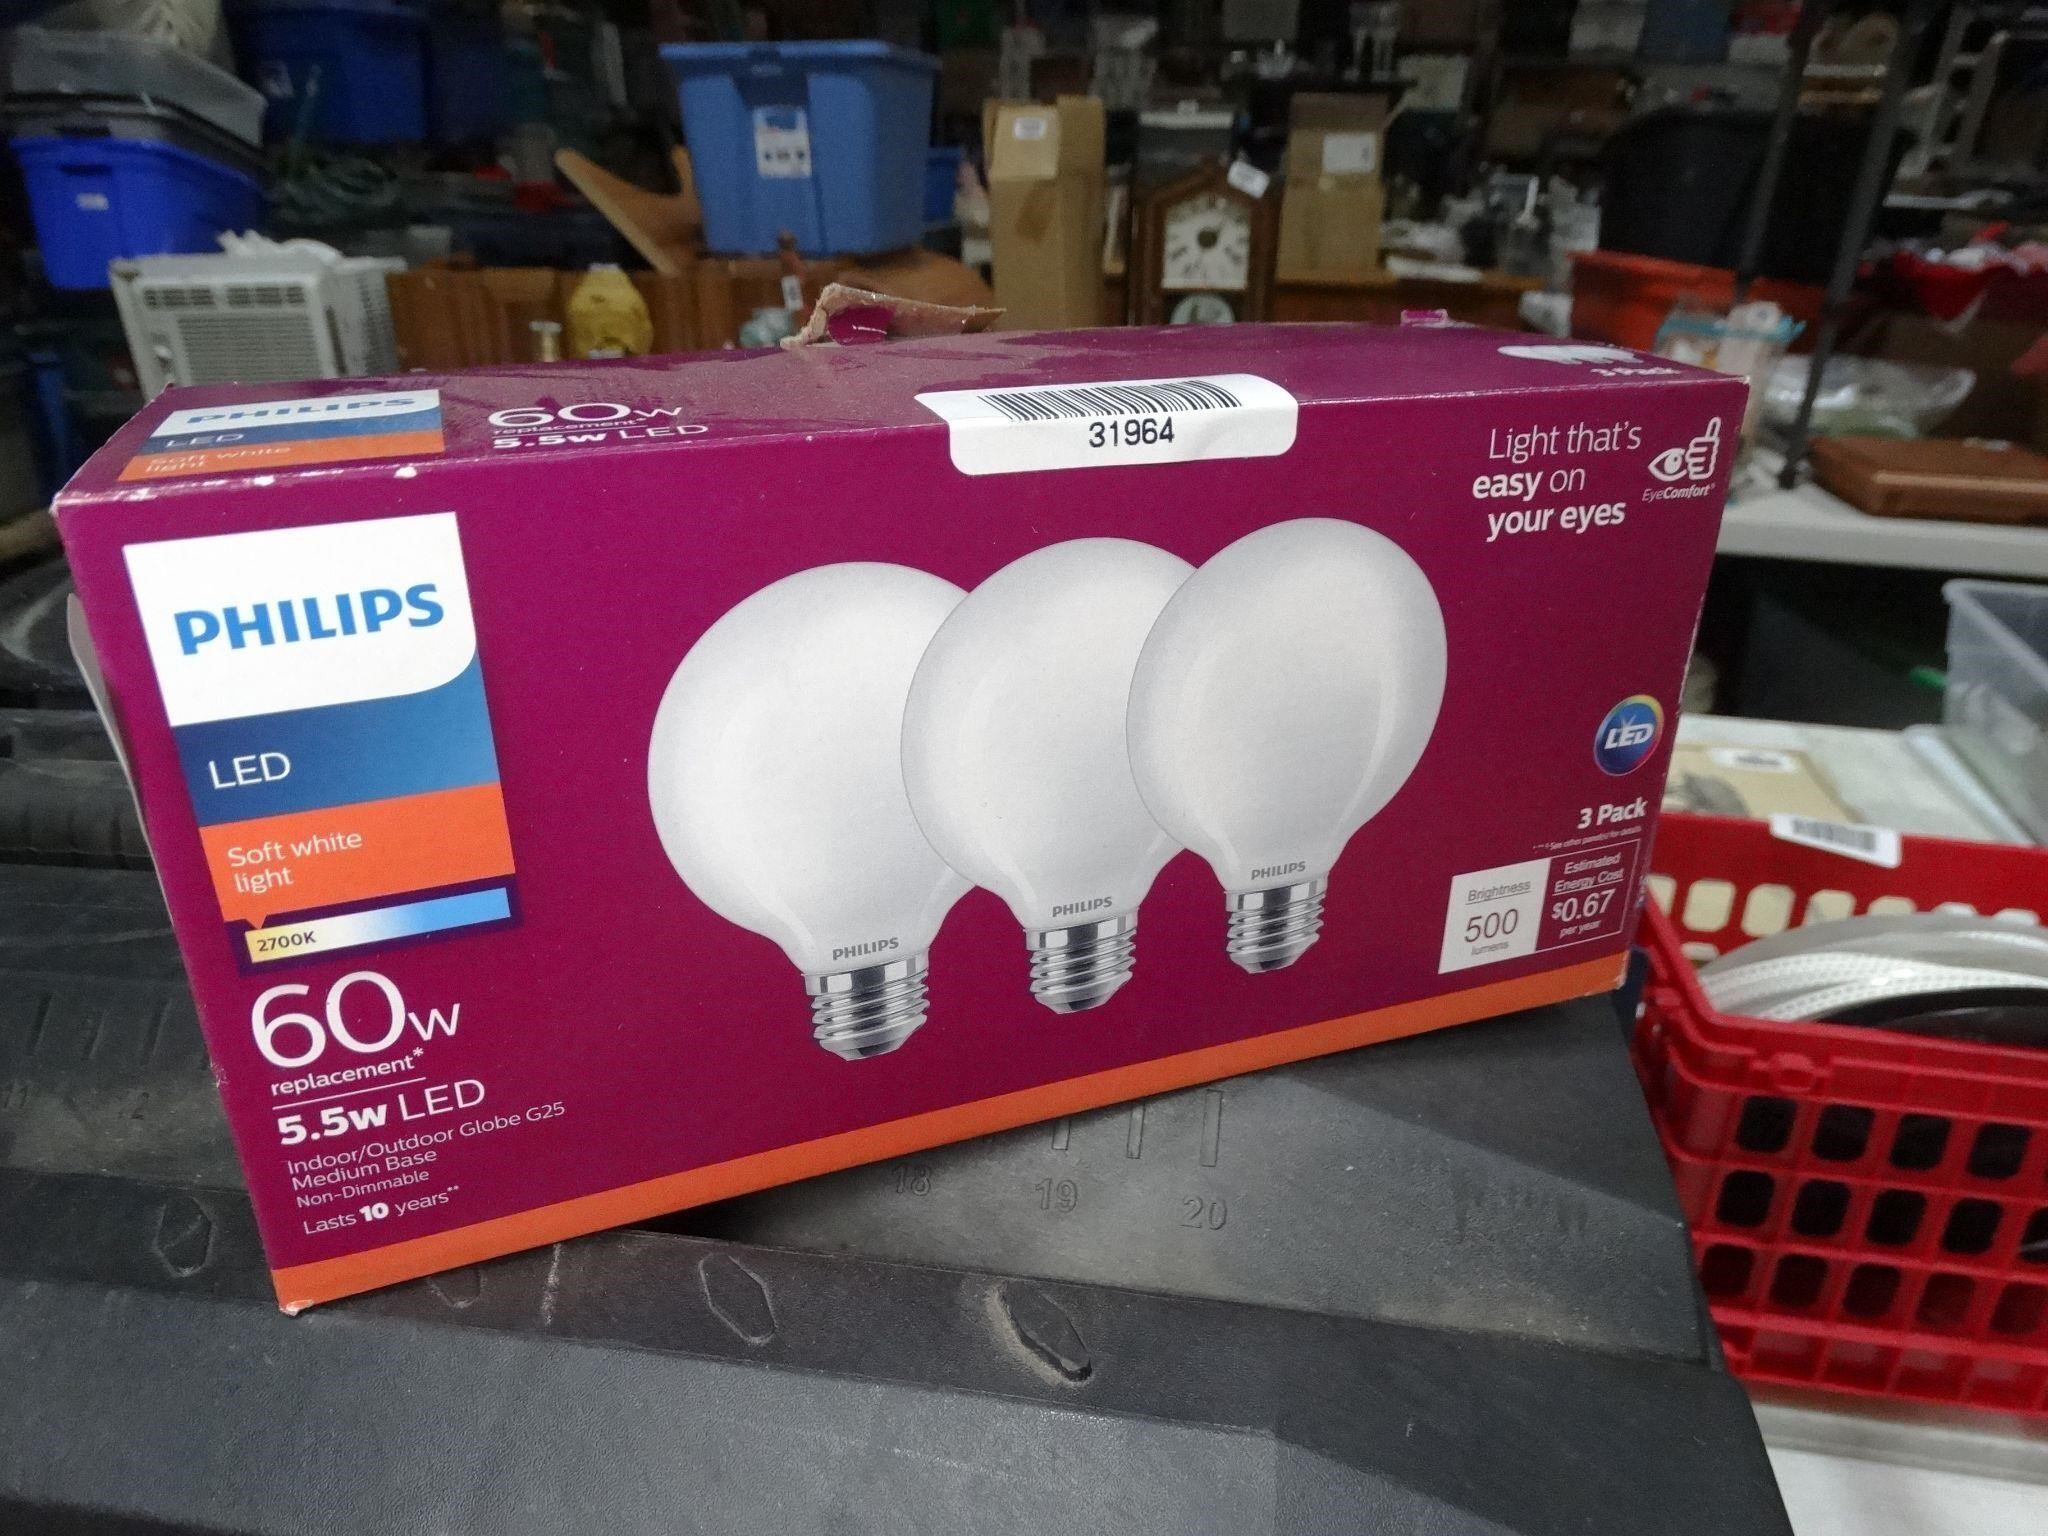 Box of 3 Phillips Soft White LED 60w Bulbs